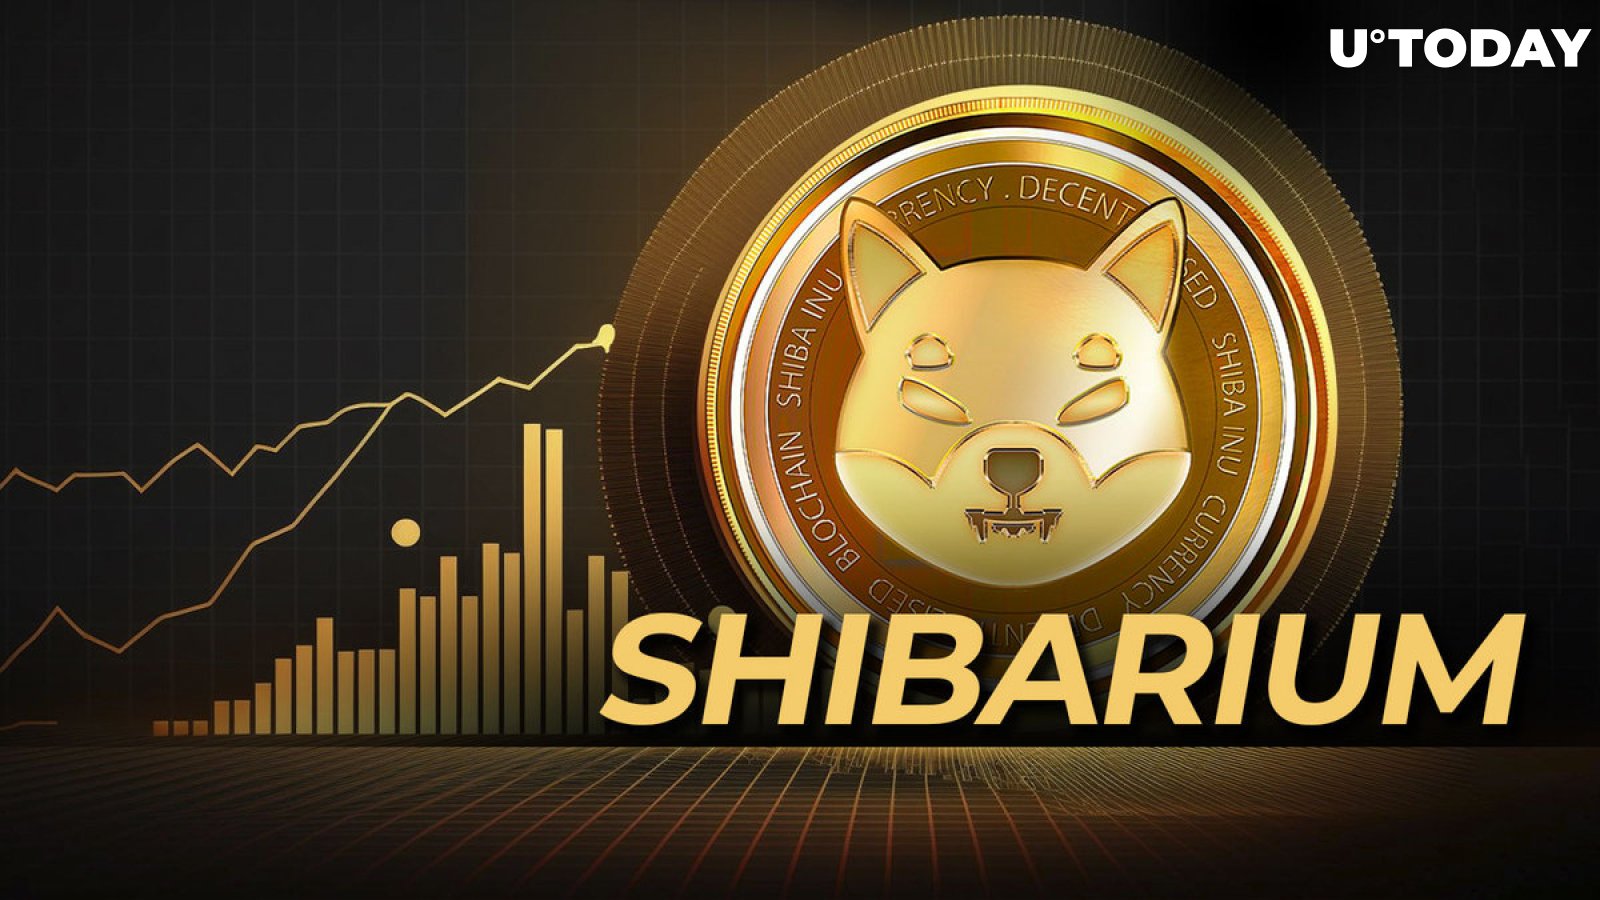 Shiba Inu: Shibarium Sets Impressive Milestone of Over 4 Million Transactions